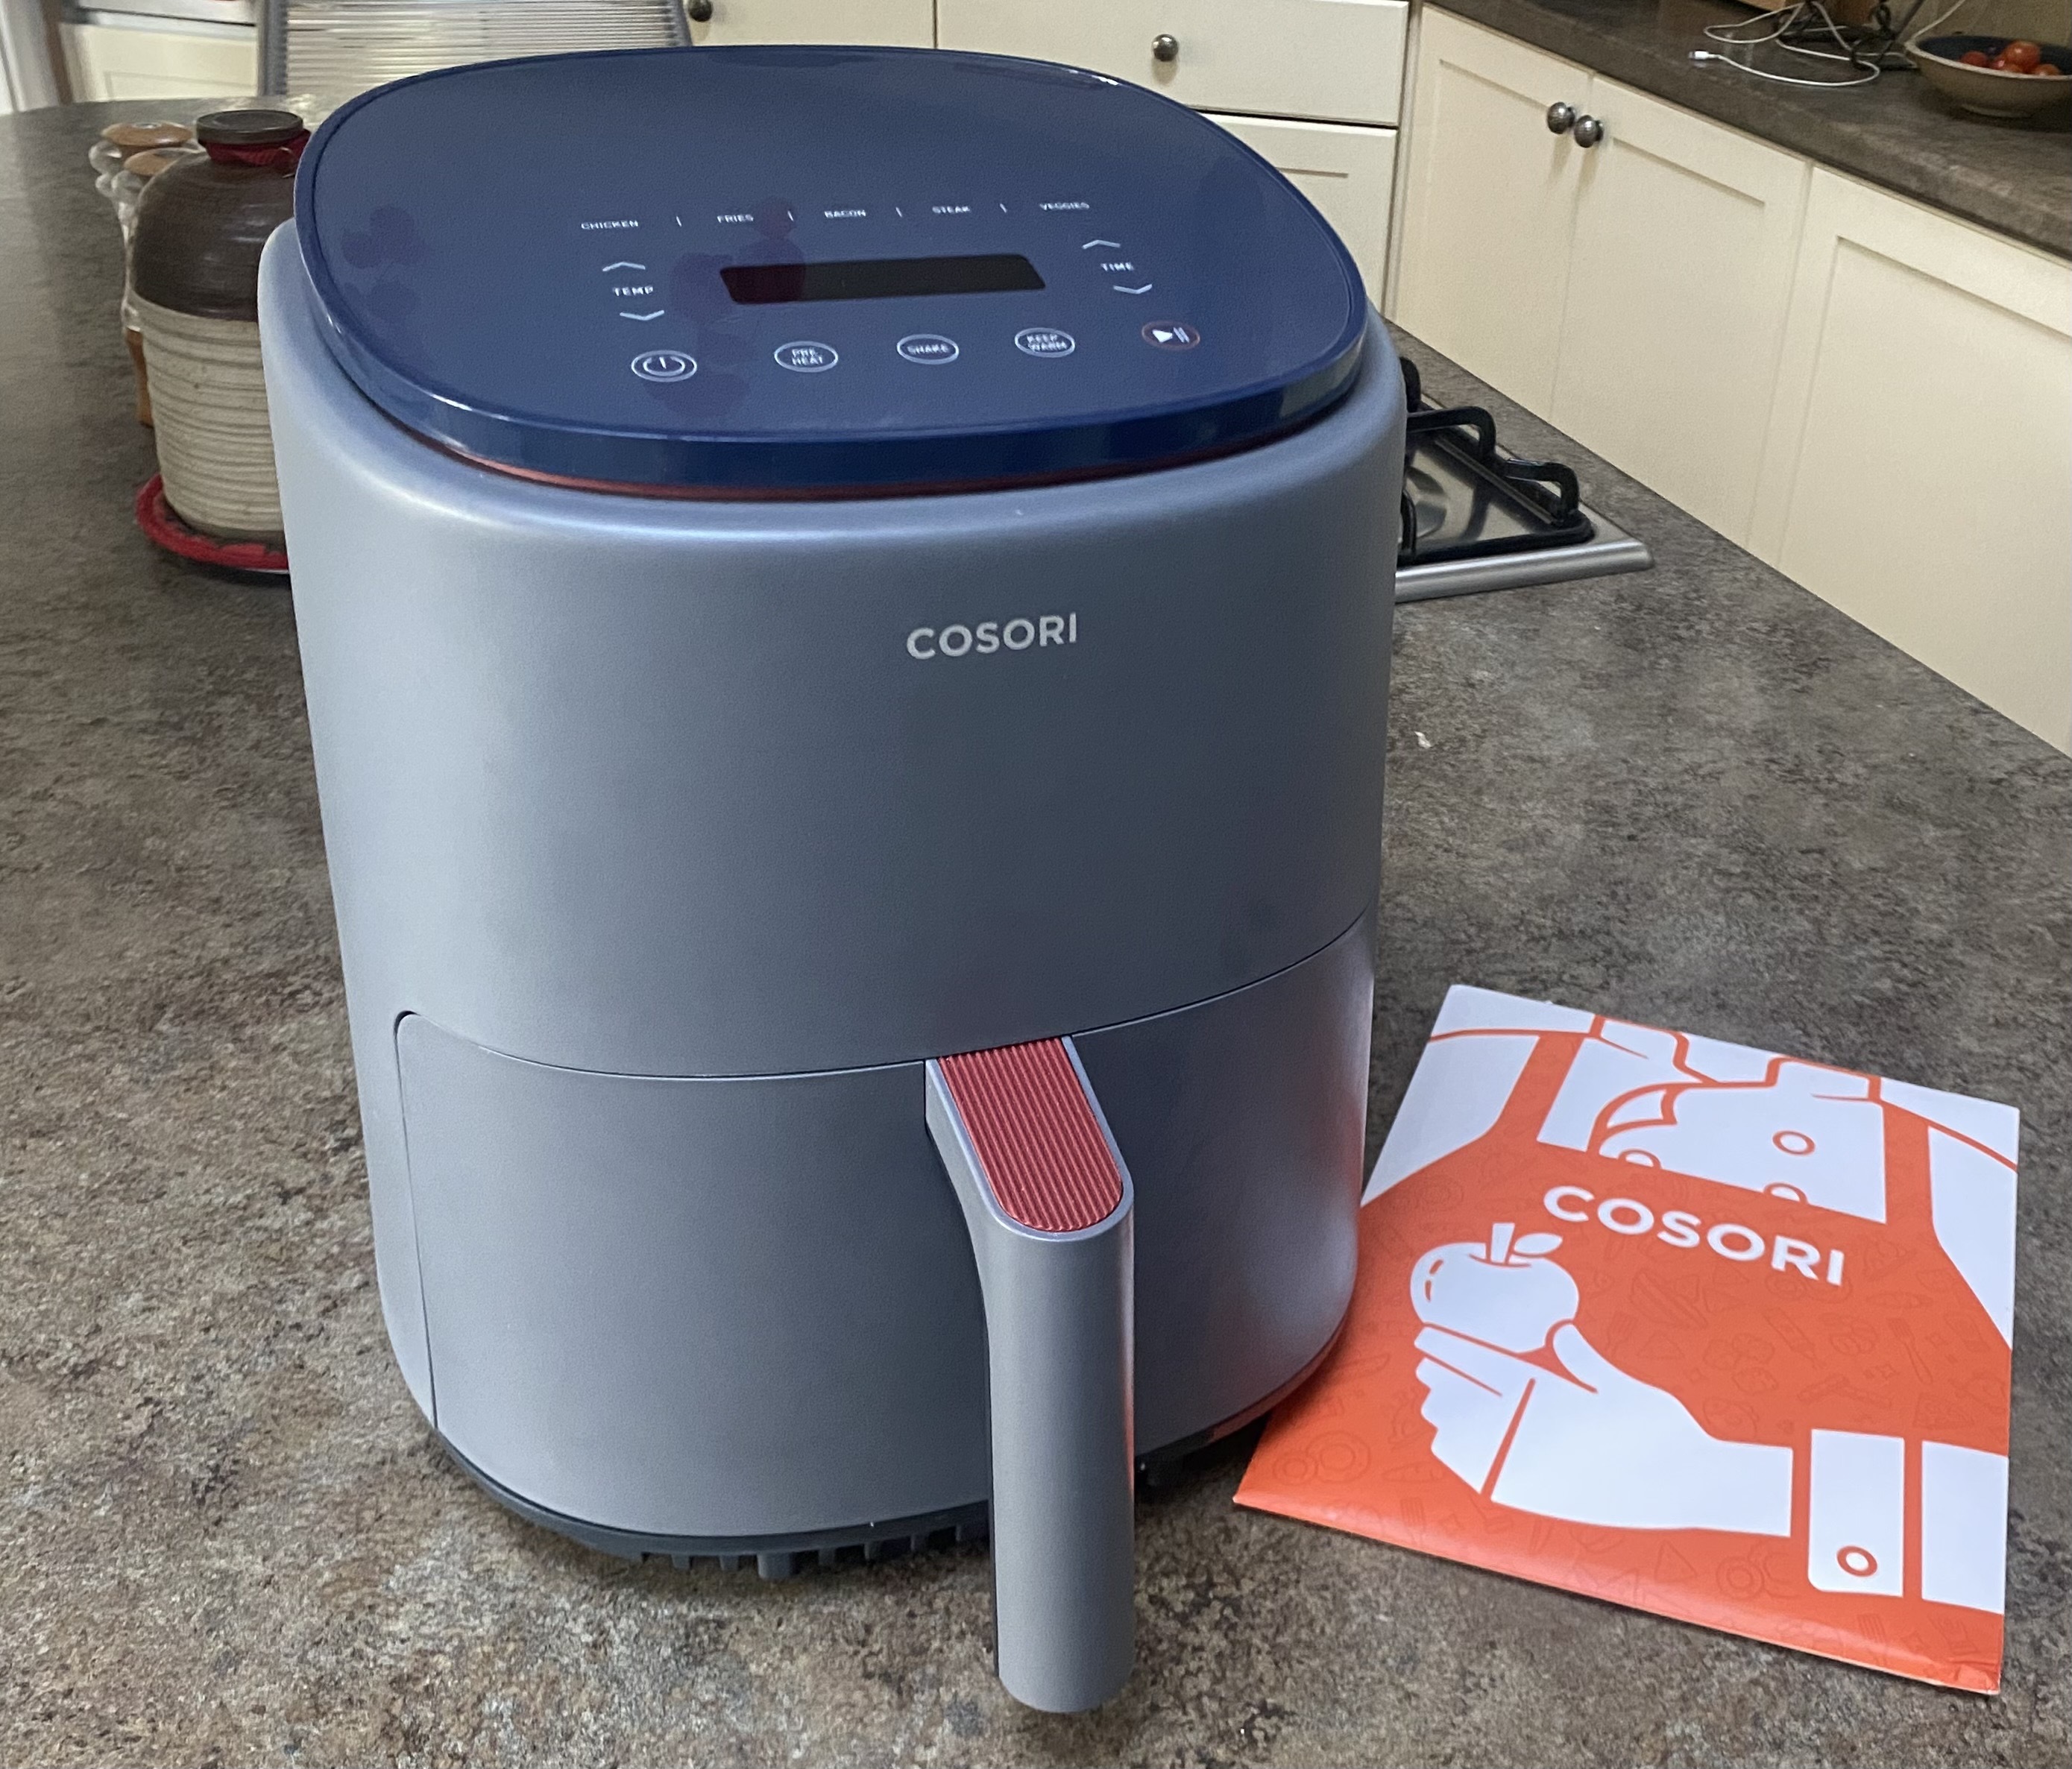 Cosori Lite Smart Air Fryer 4-Quart Review